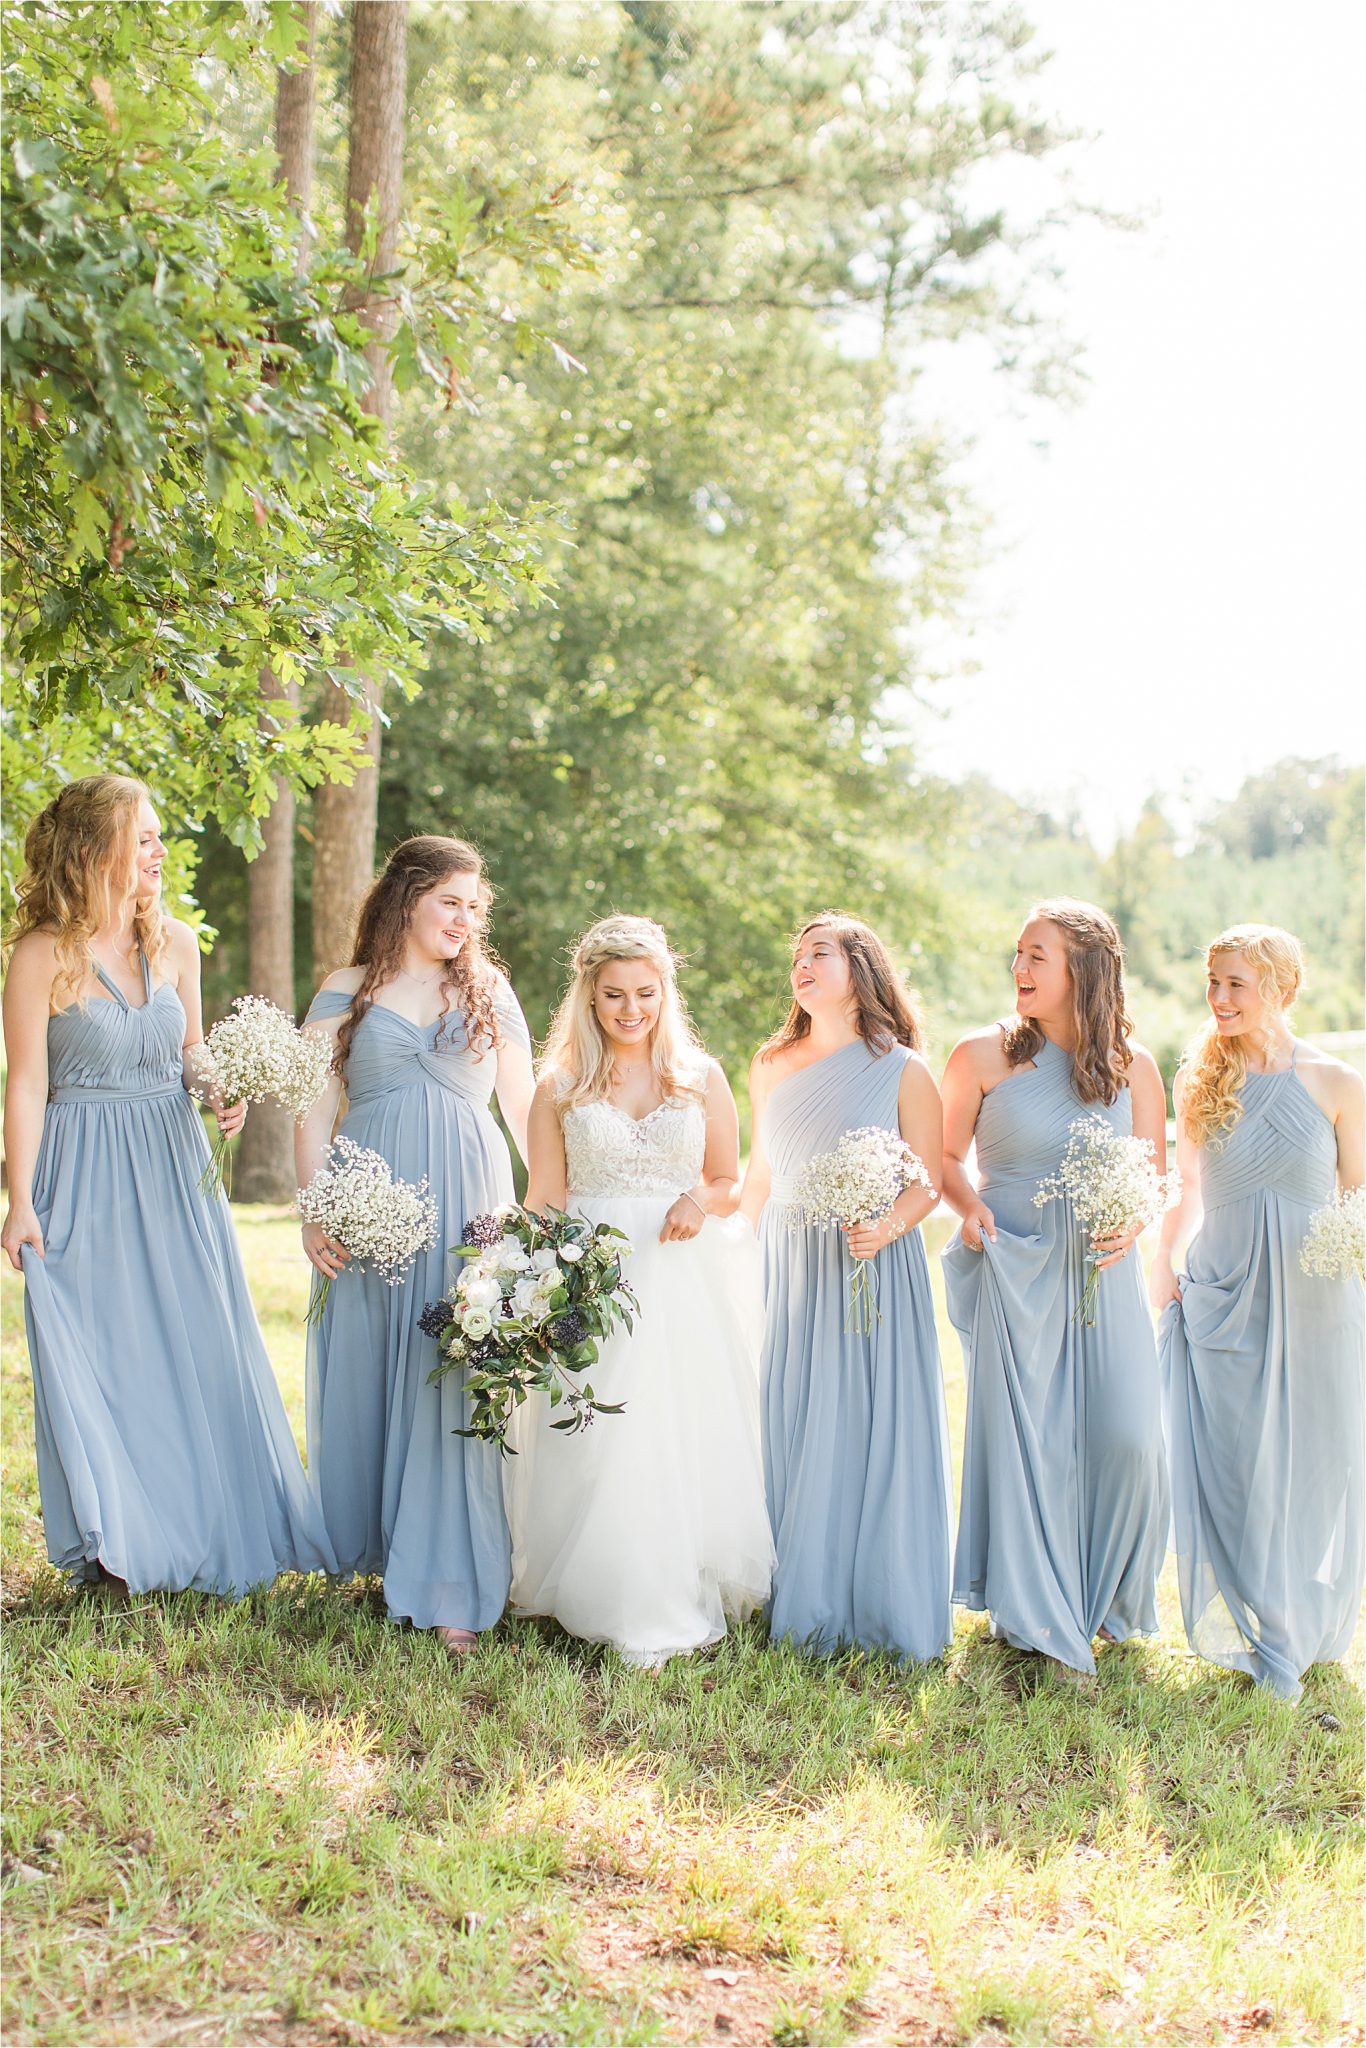 bride-bridesmaids-bouquets-periwinkle-long-dresses-different-cuts-styles